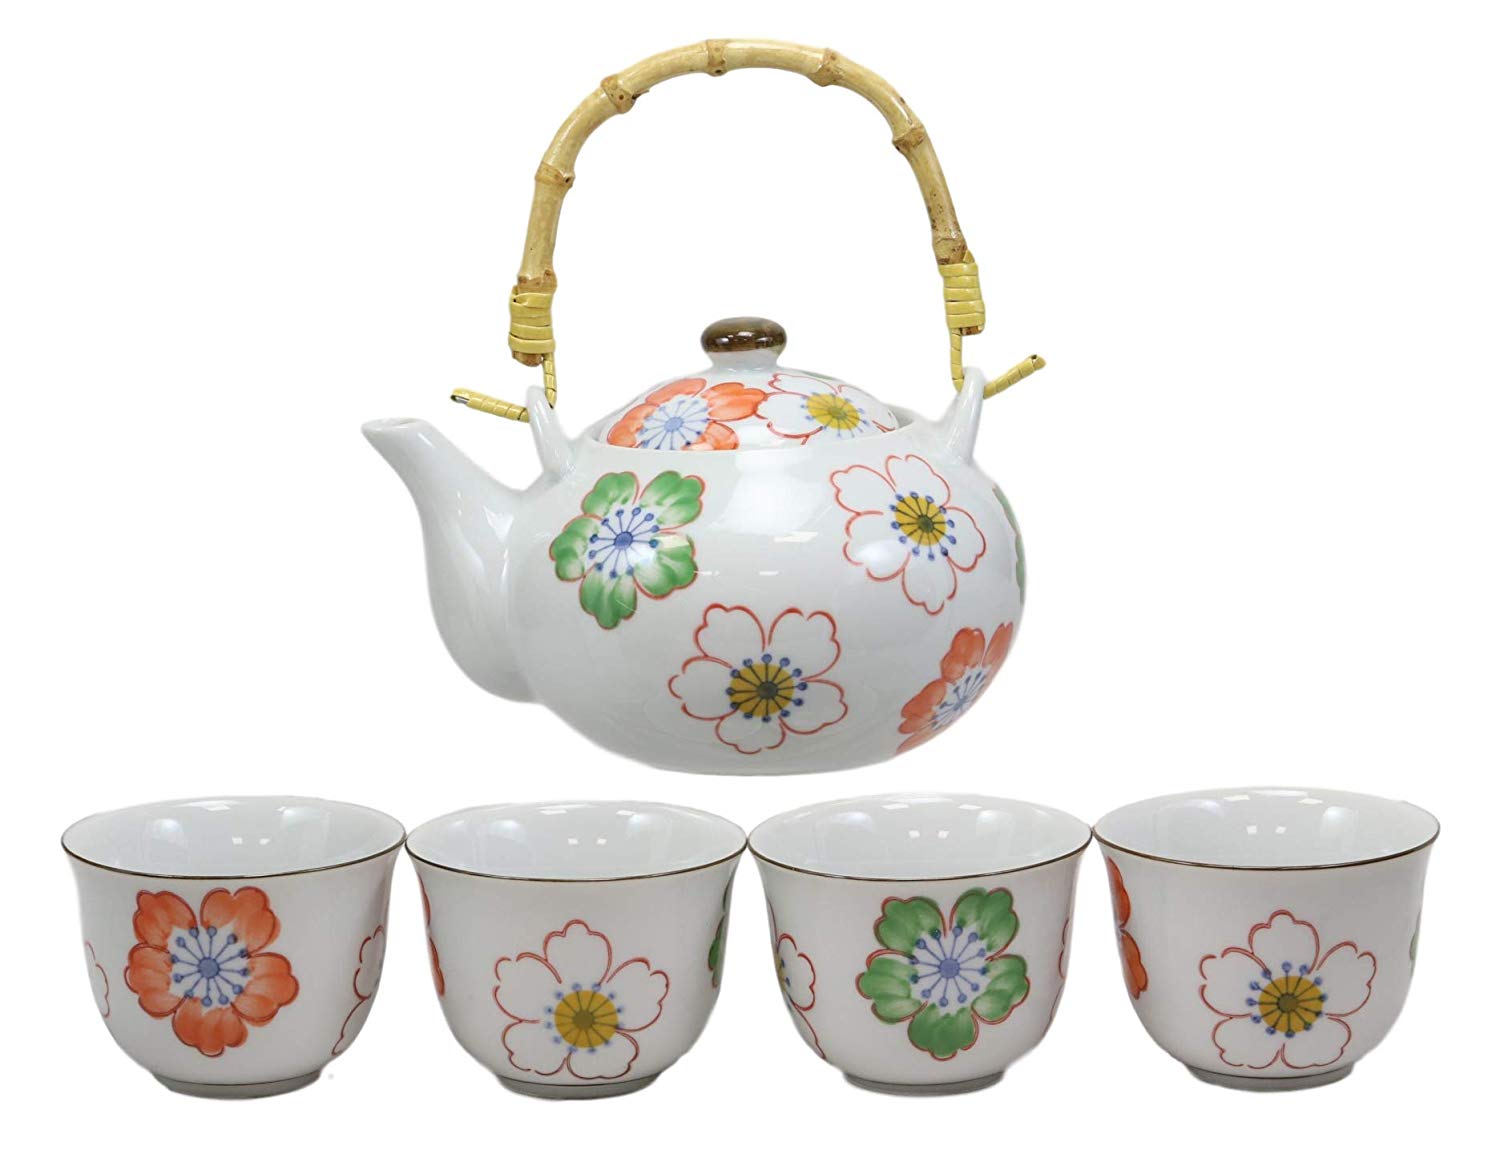 Japanese Design Colorful Botanic Floral Porcelain White Tea Pot And Cups Set - image 2 of 8